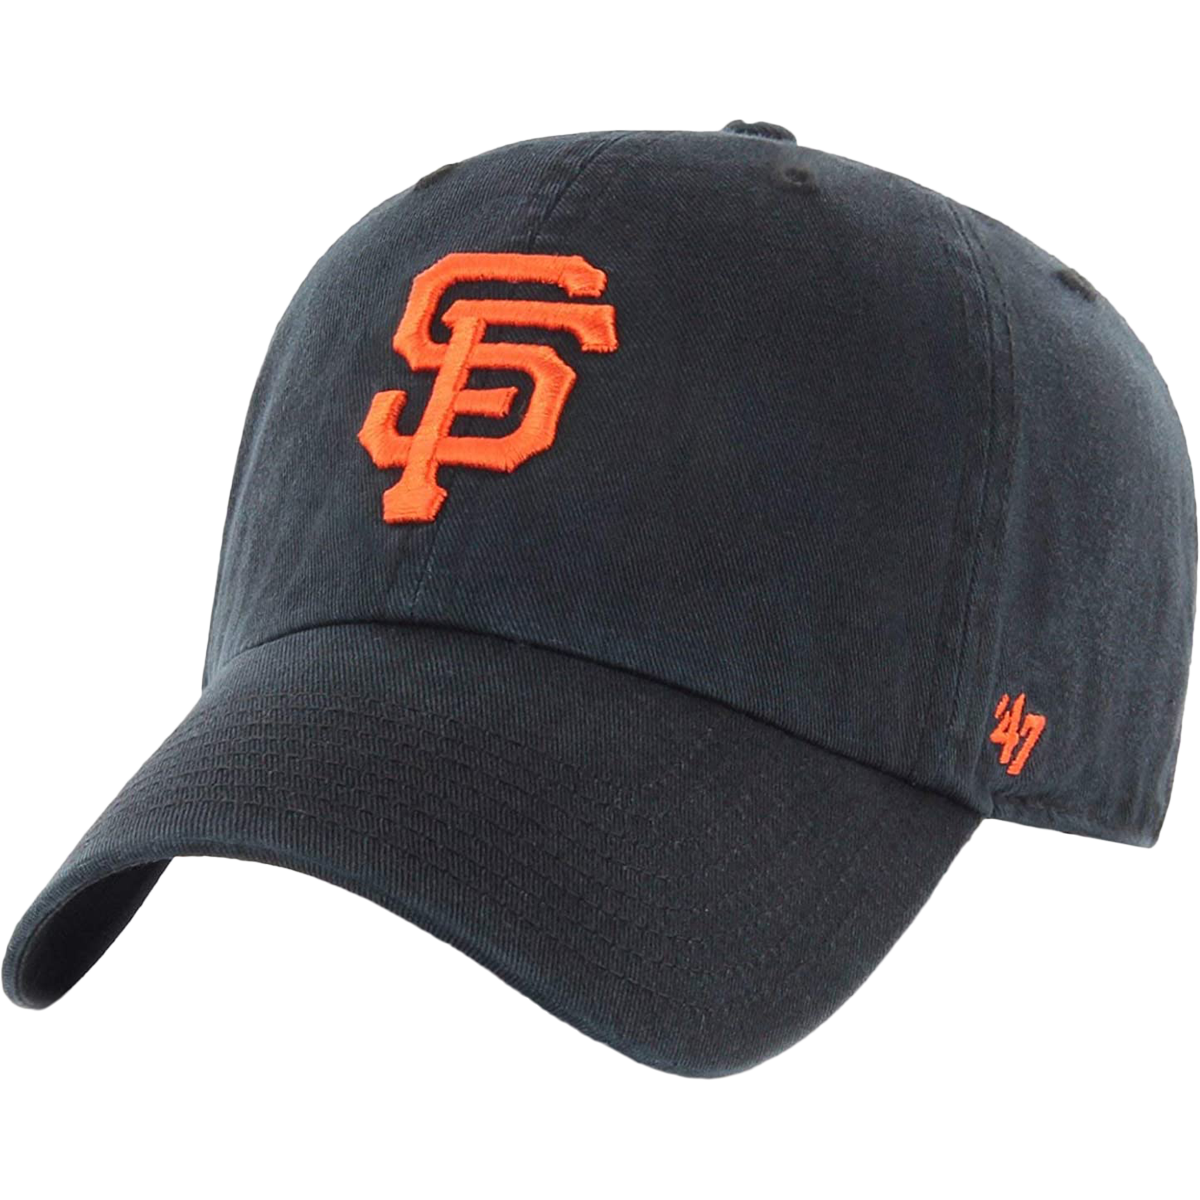  Your Fan Shop for San Francisco Giants